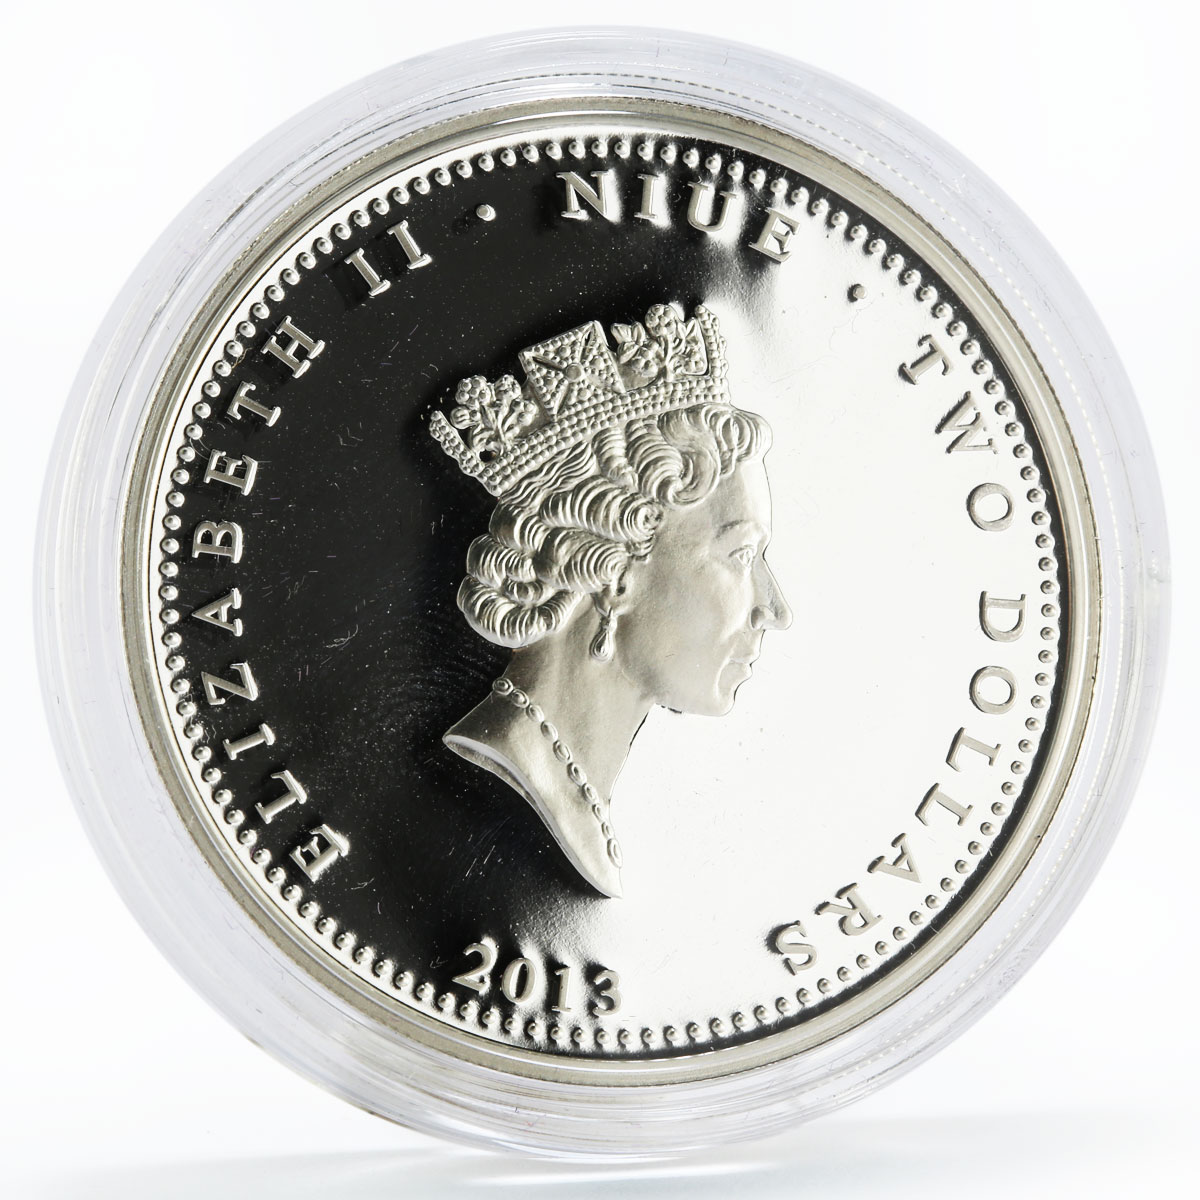 Niue 2 dollars Love is Precious series Swallows colored silver coin 2013